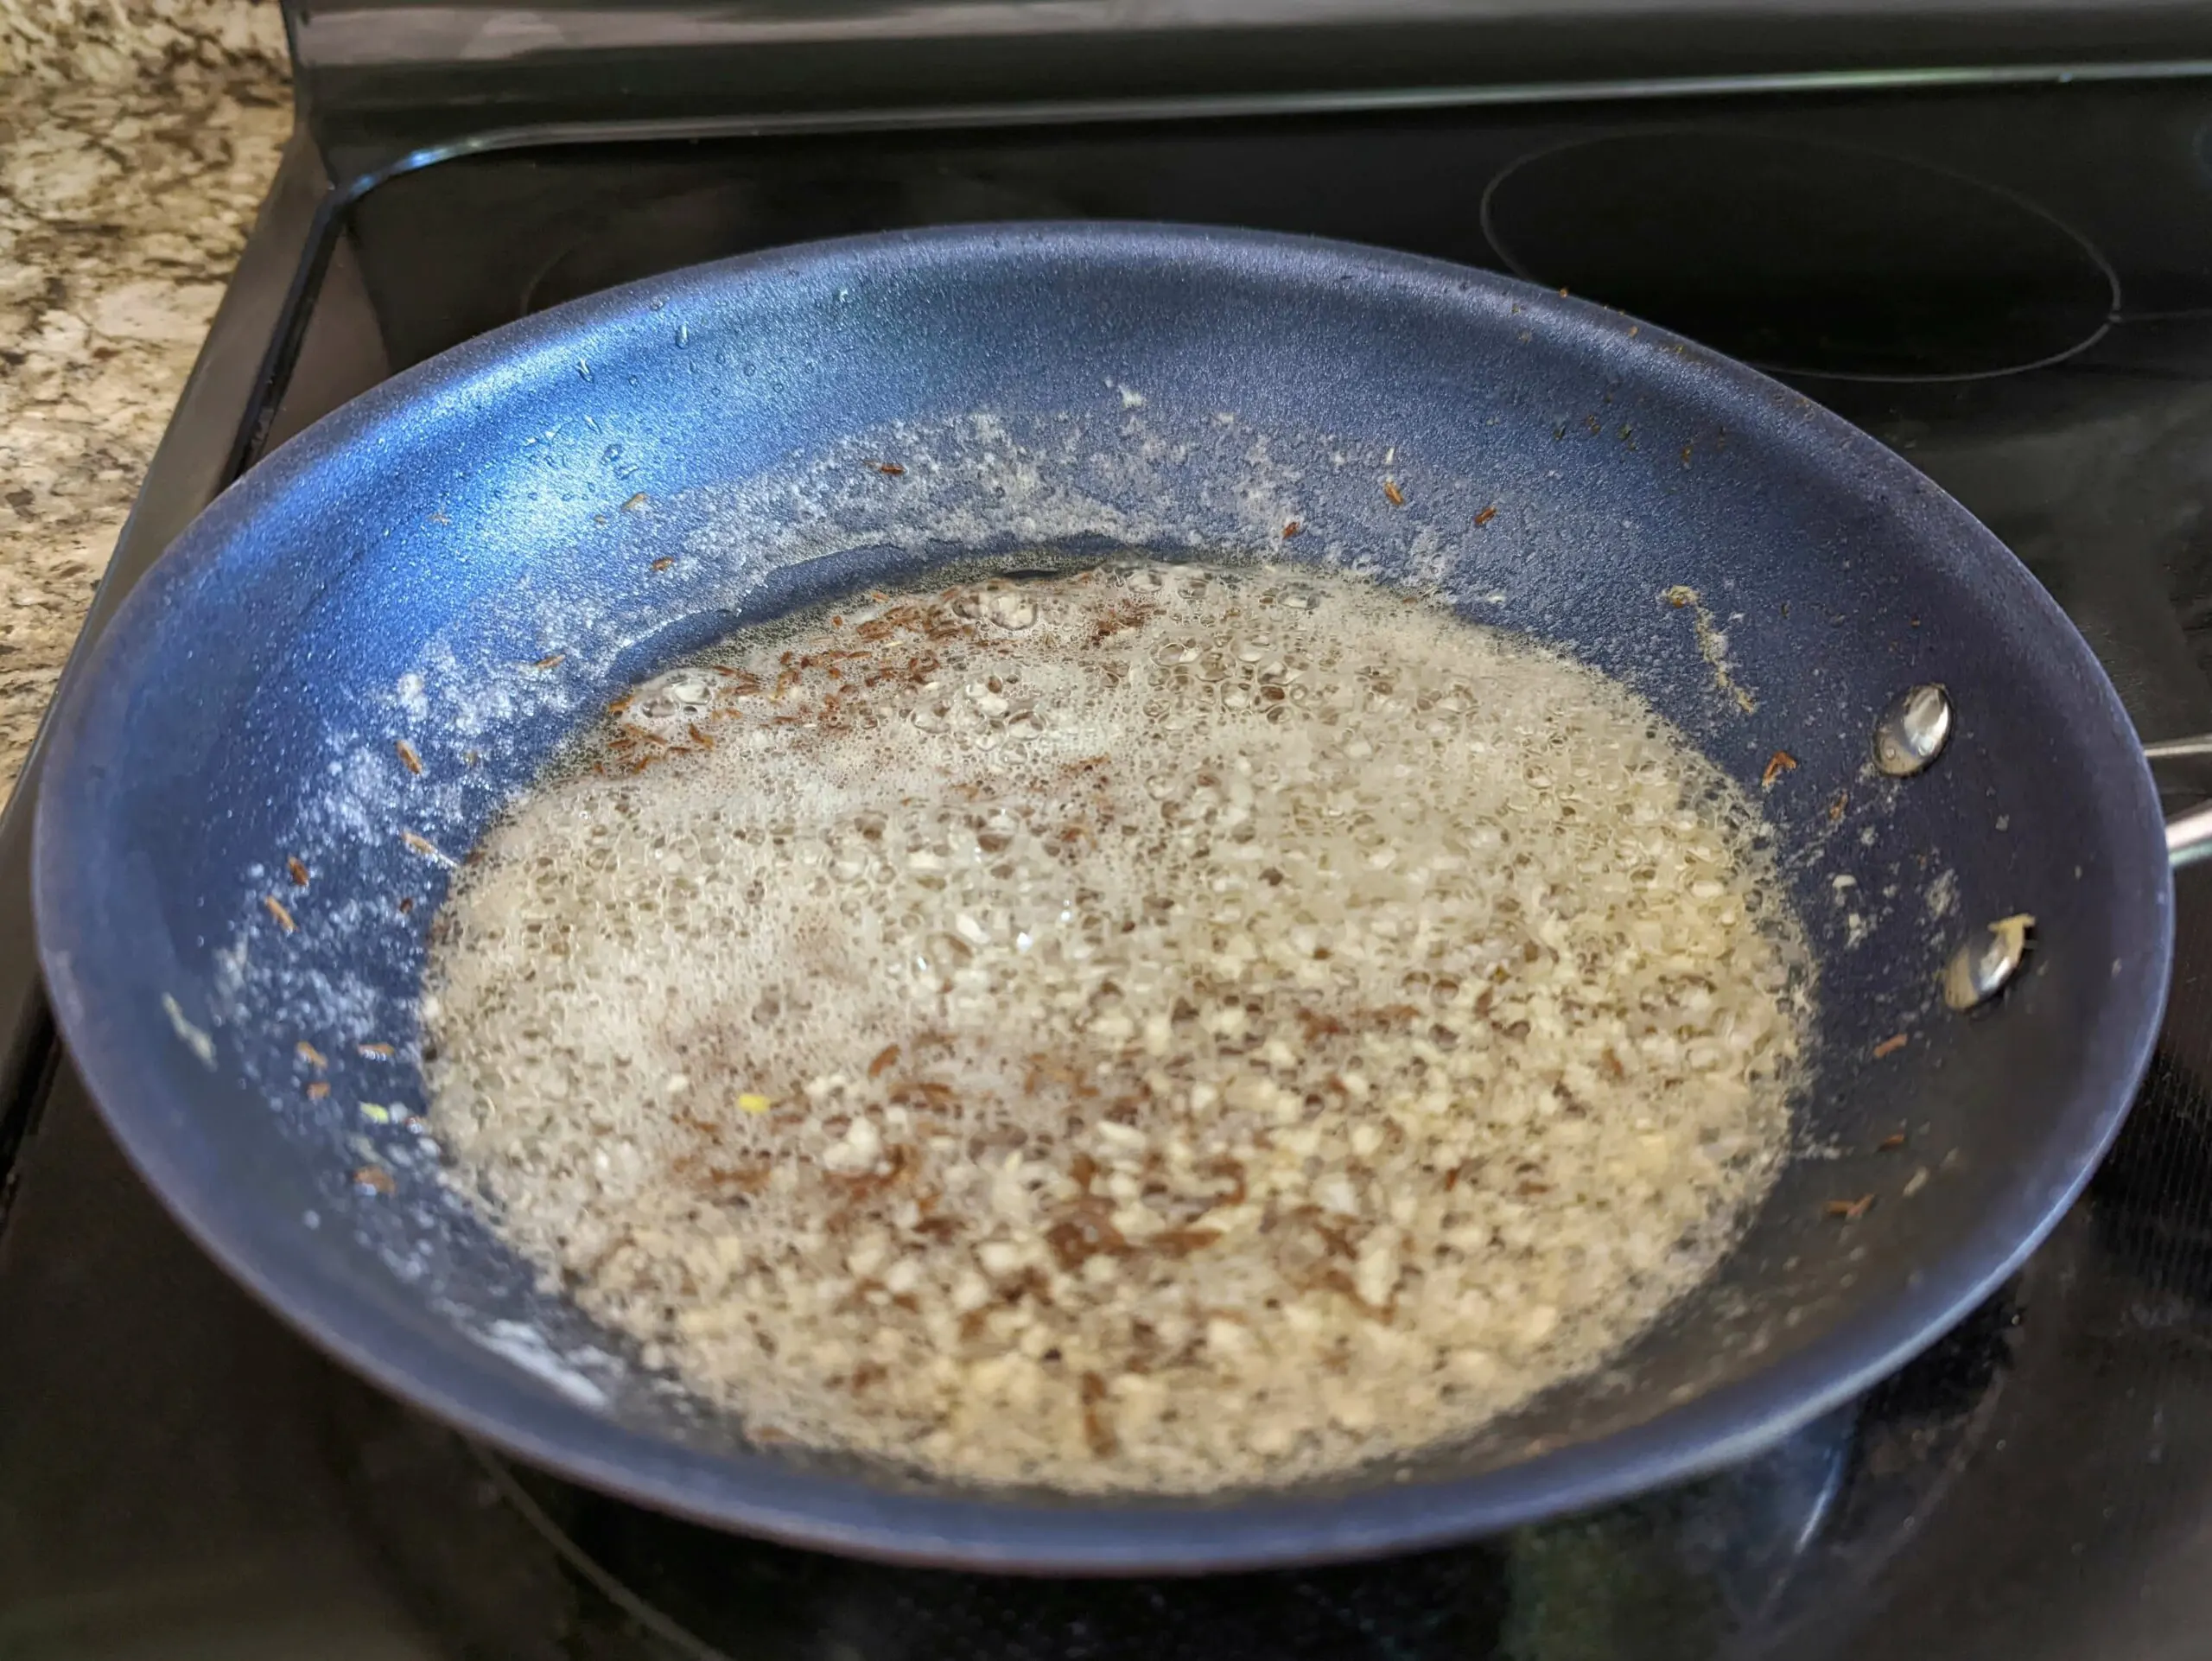 Butter and garlic sautéing in a skillet.